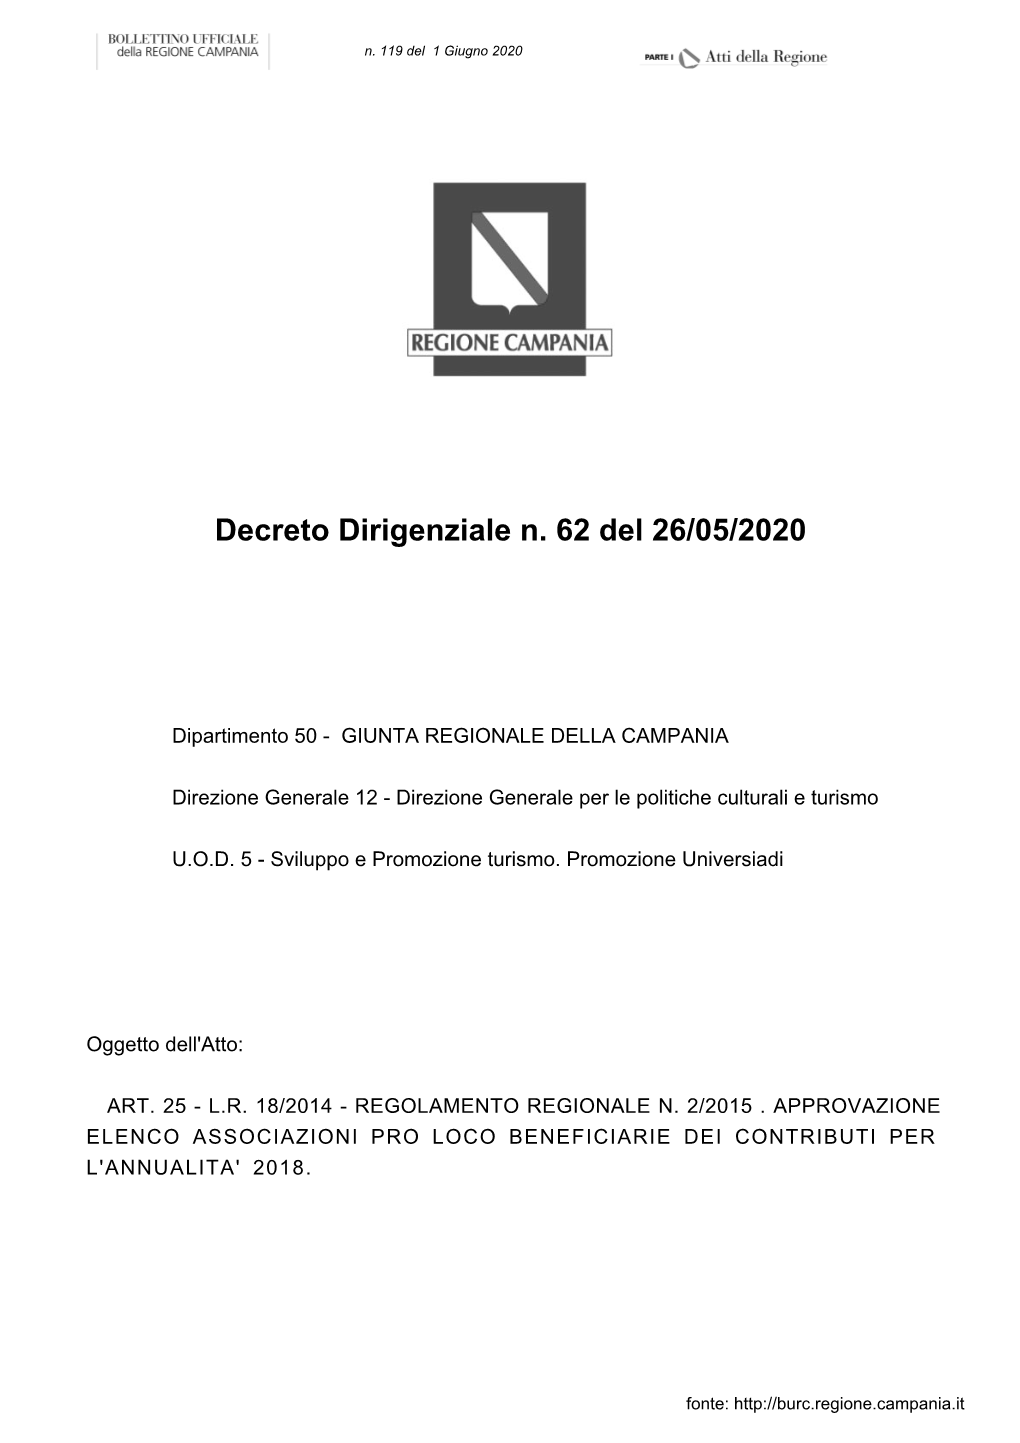 Decreto Dirigenziale N. 62 Del 26/05/2020